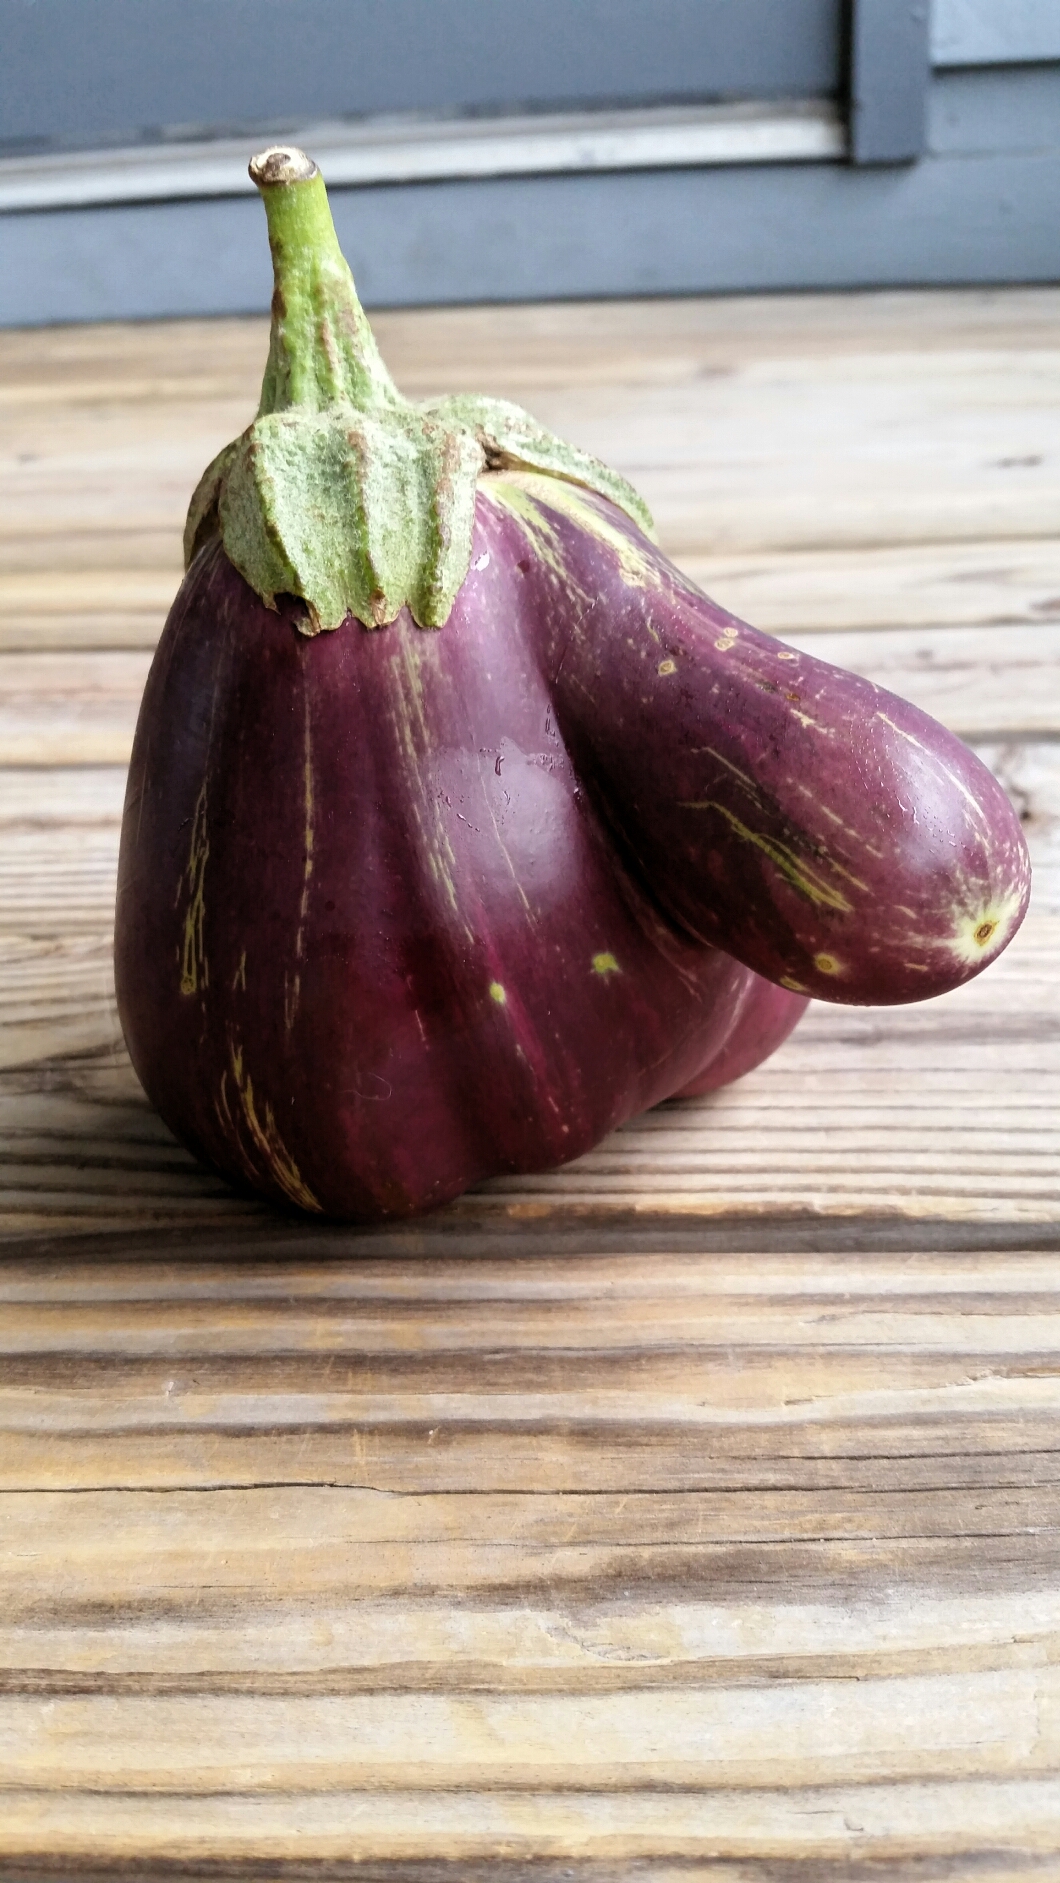 Eggplant funny shape